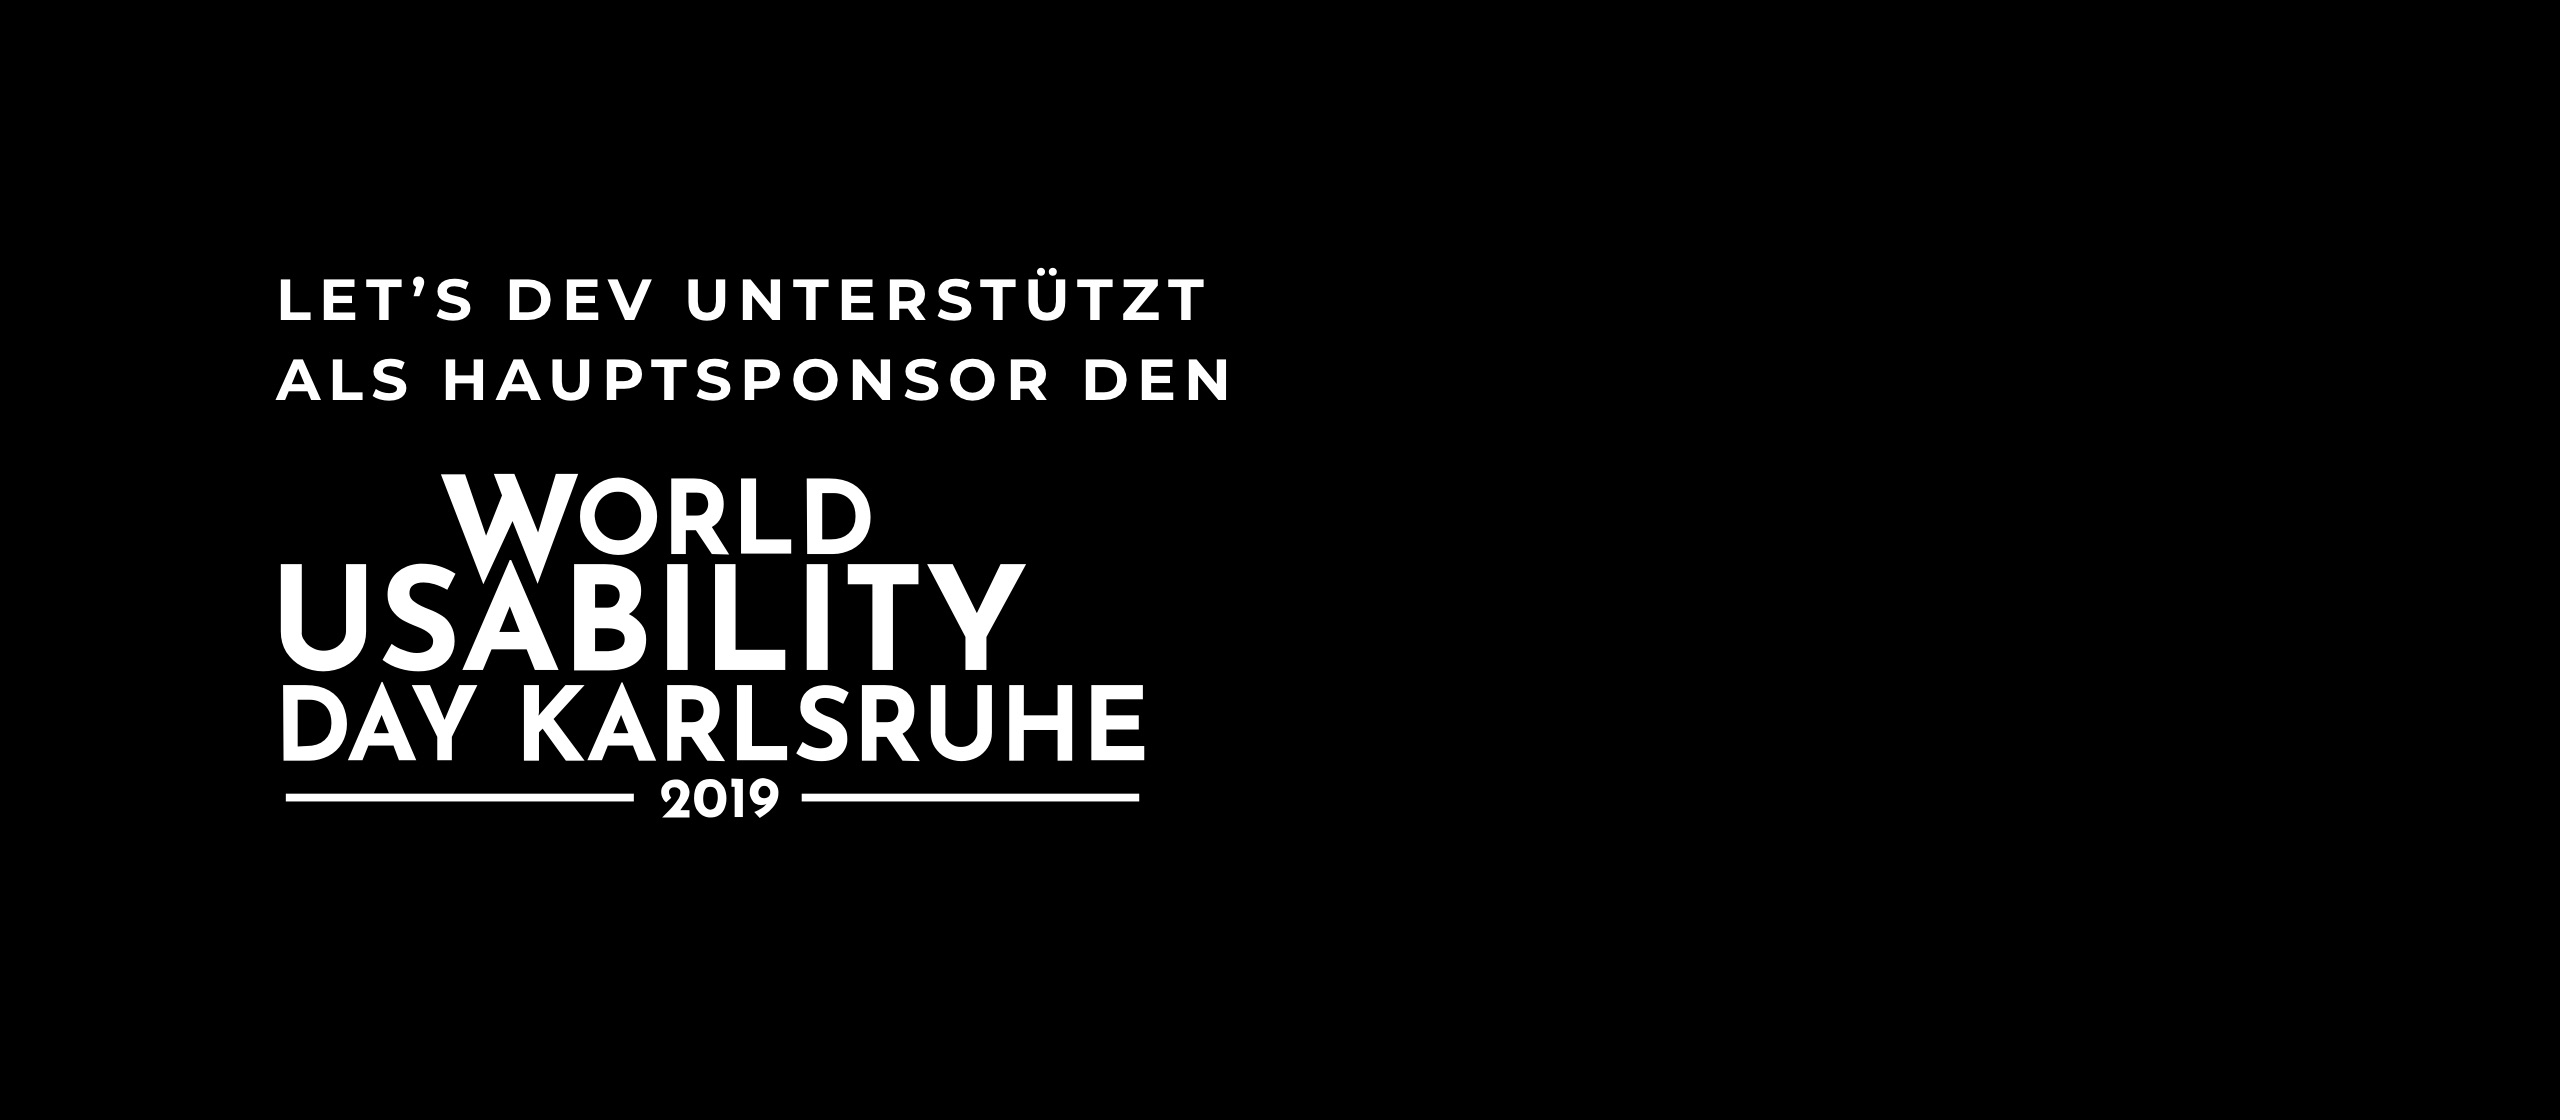 let’s dev Blog | World Usability Day 2019 in Karlsruhe – let’s dev unterstützt als Hauptsponsor